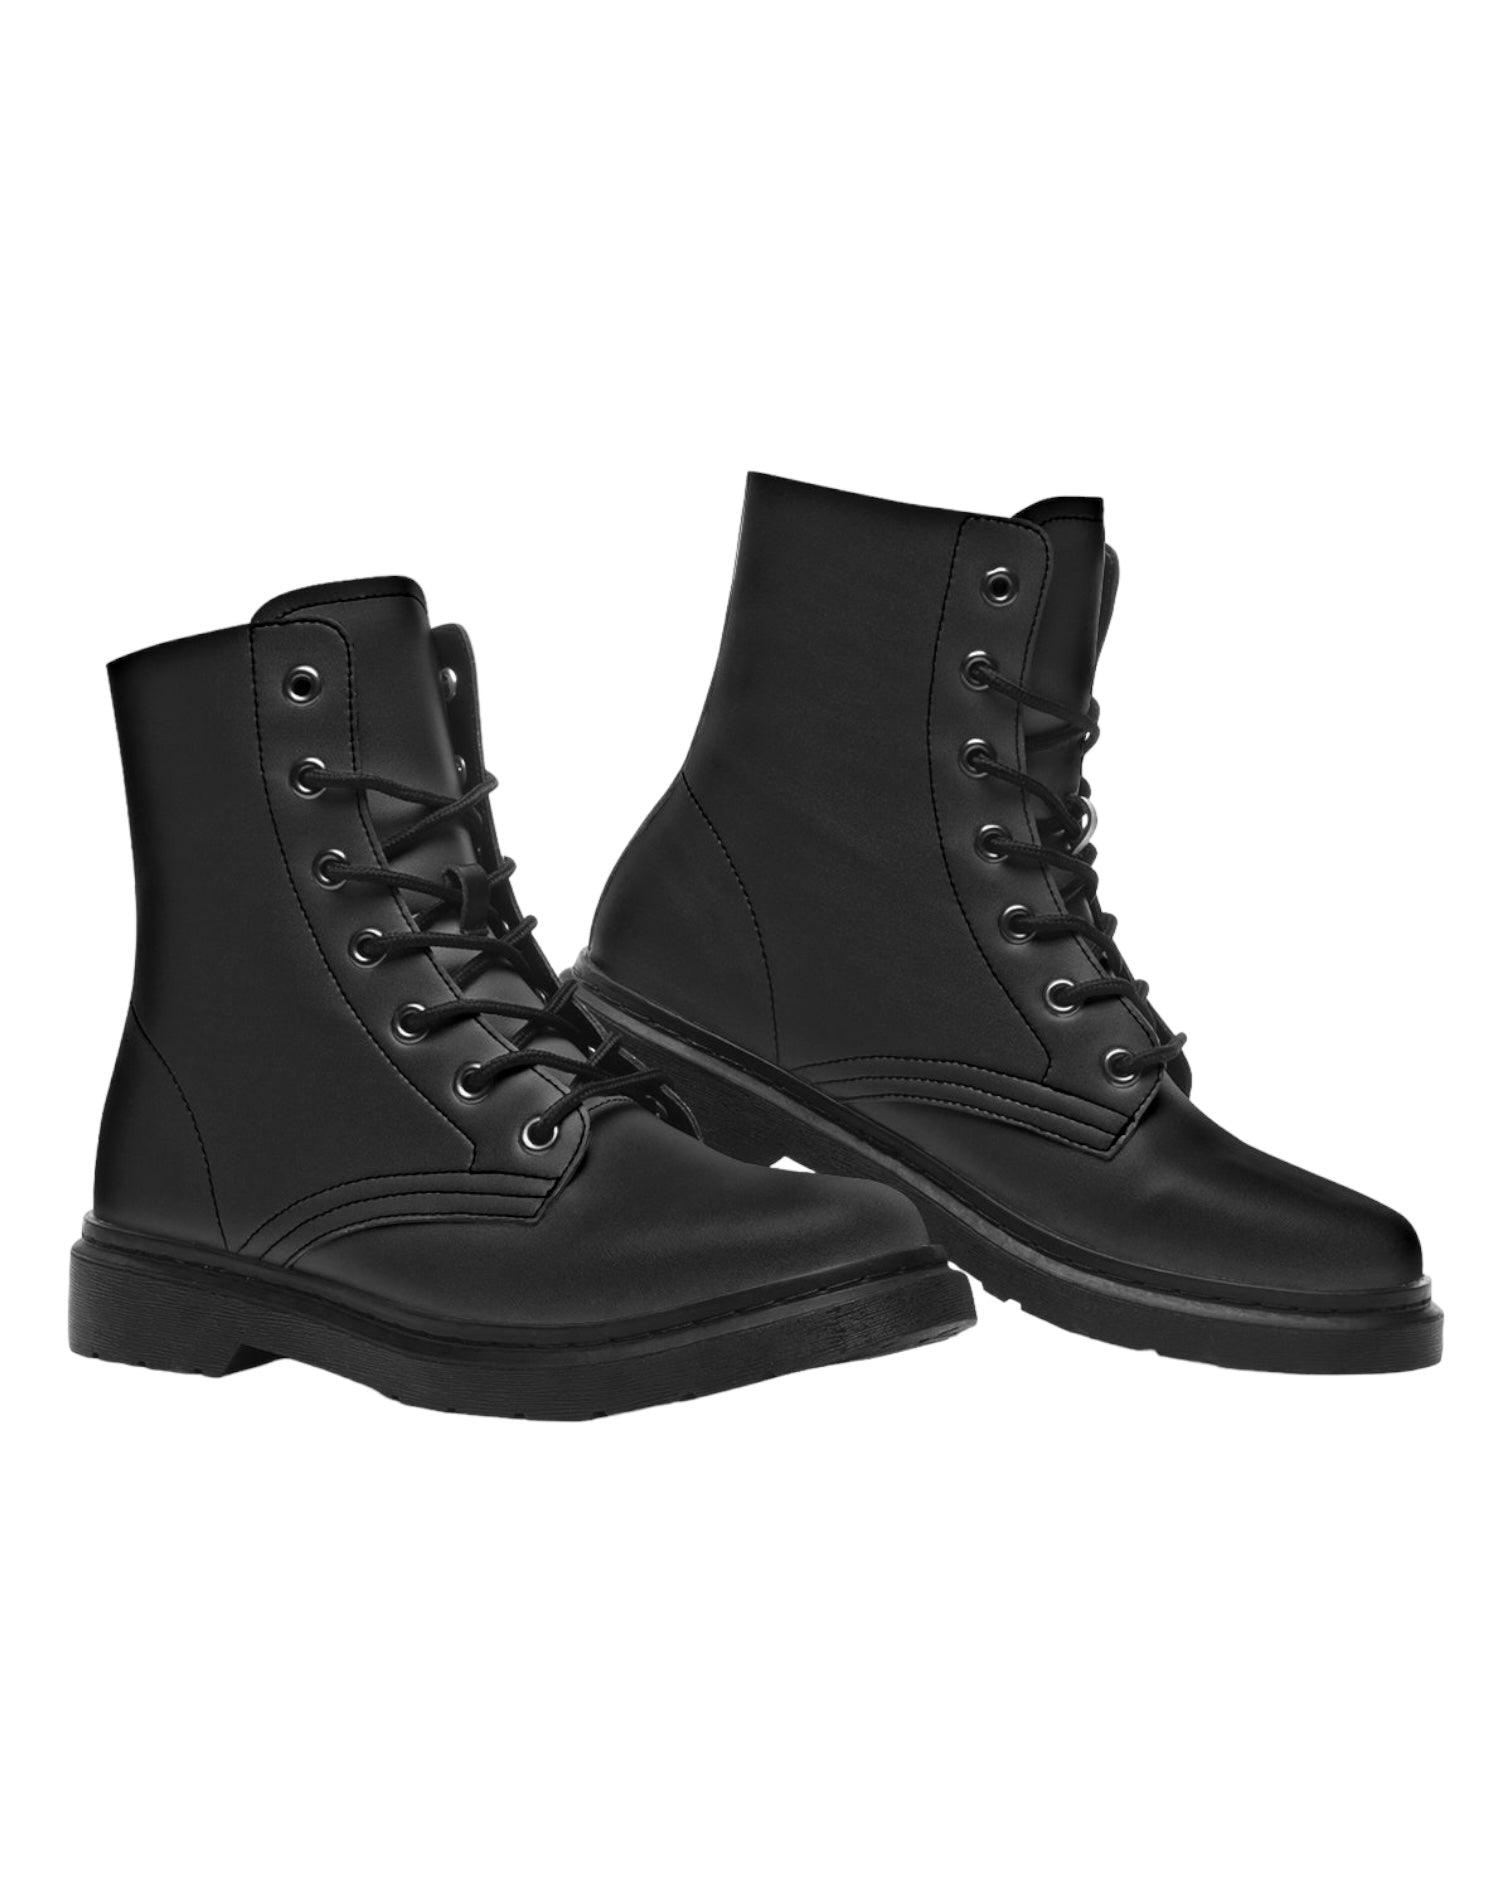 Black Combat Festival Boots